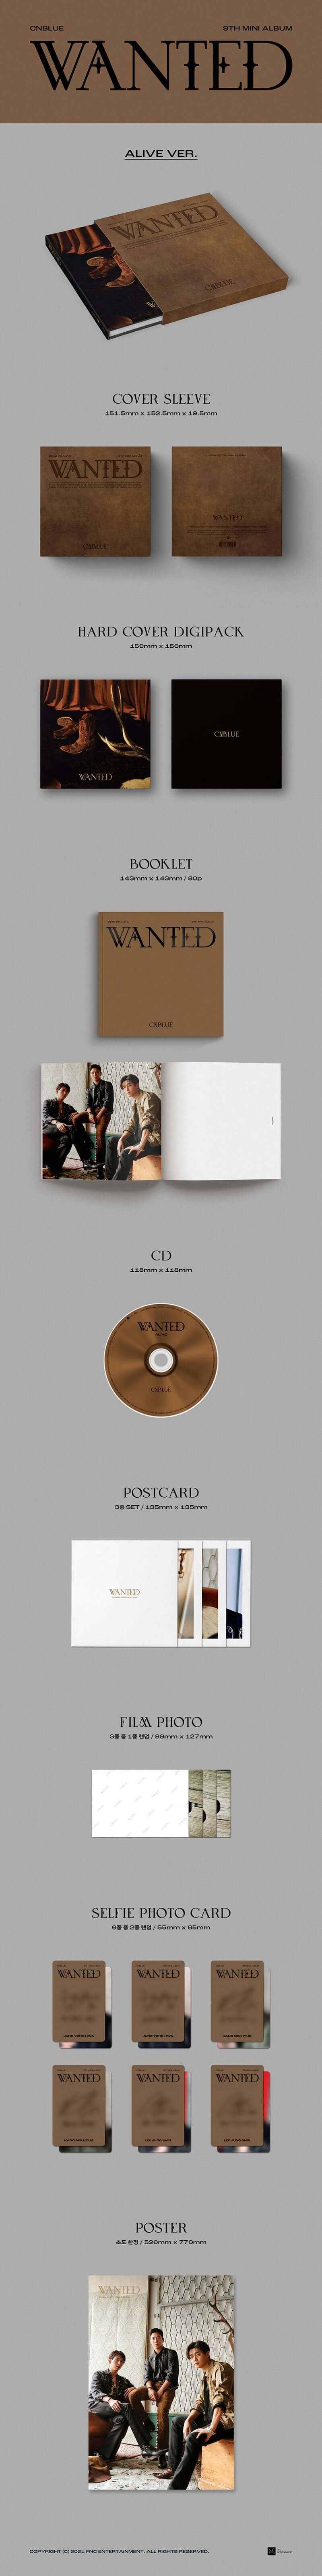 CNBlue - Wanted (noveno mini álbum)